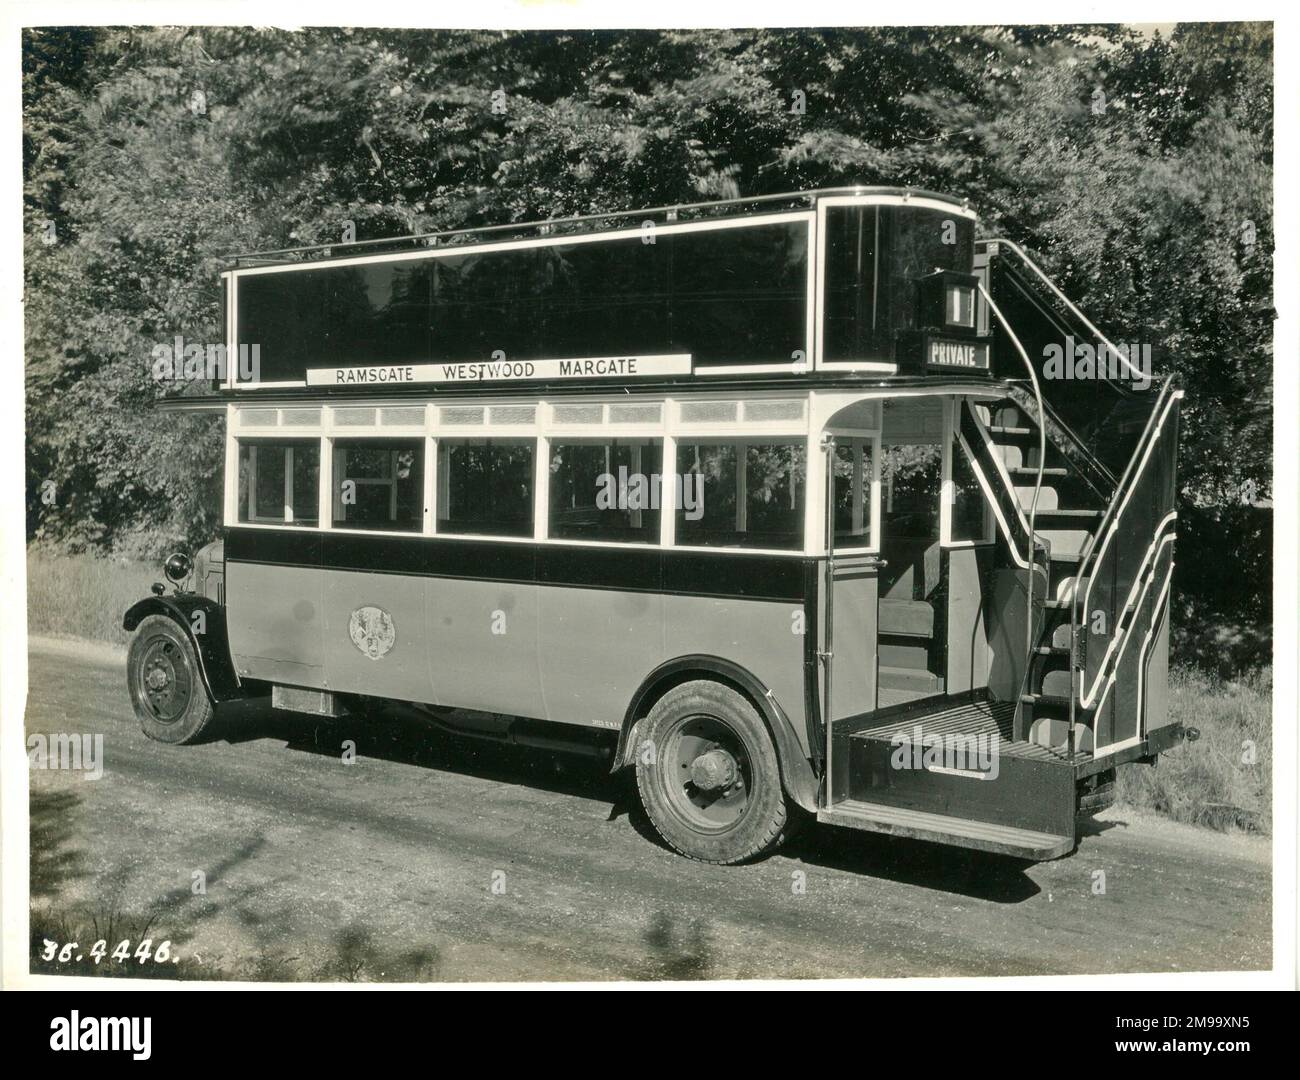 Autobus a due piani; Ramsgate - Westwood - Margate, Hall Lewis a 48 posti. Foto Stock